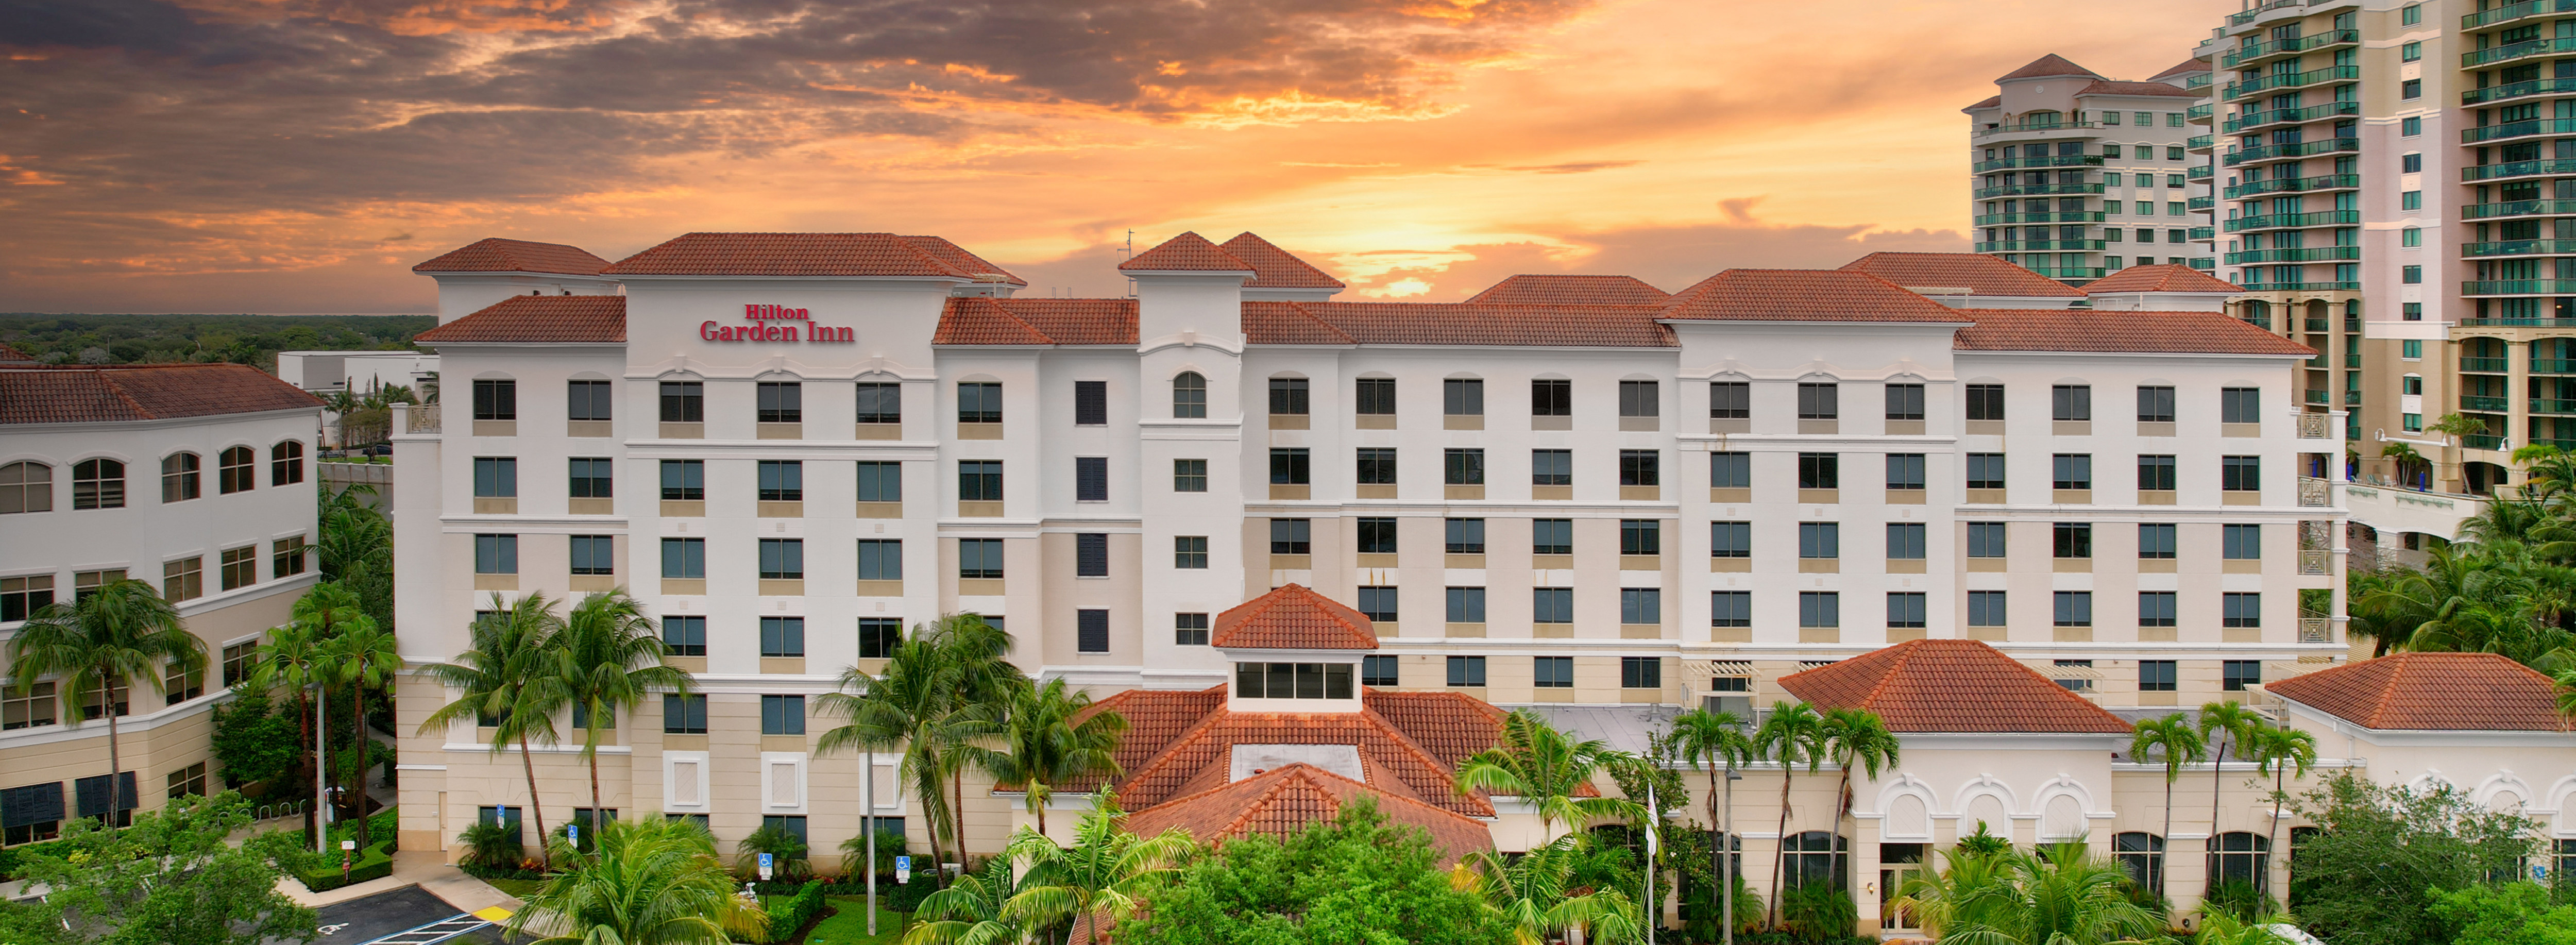 Hilton Garden Inn Palm Beach Gardens hotel exterior